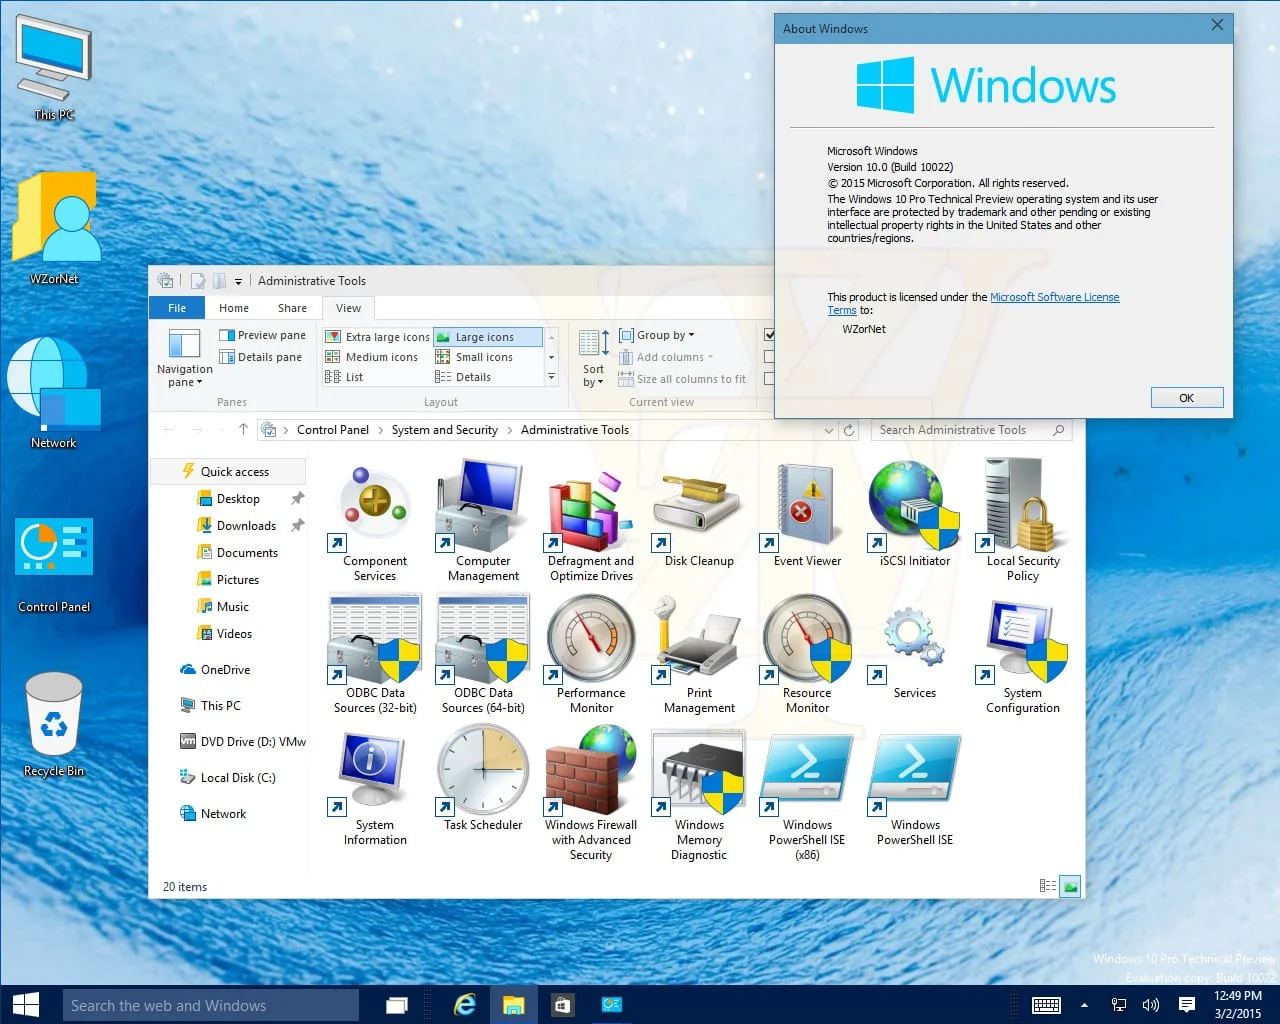 Windows_10_Build_10022_07